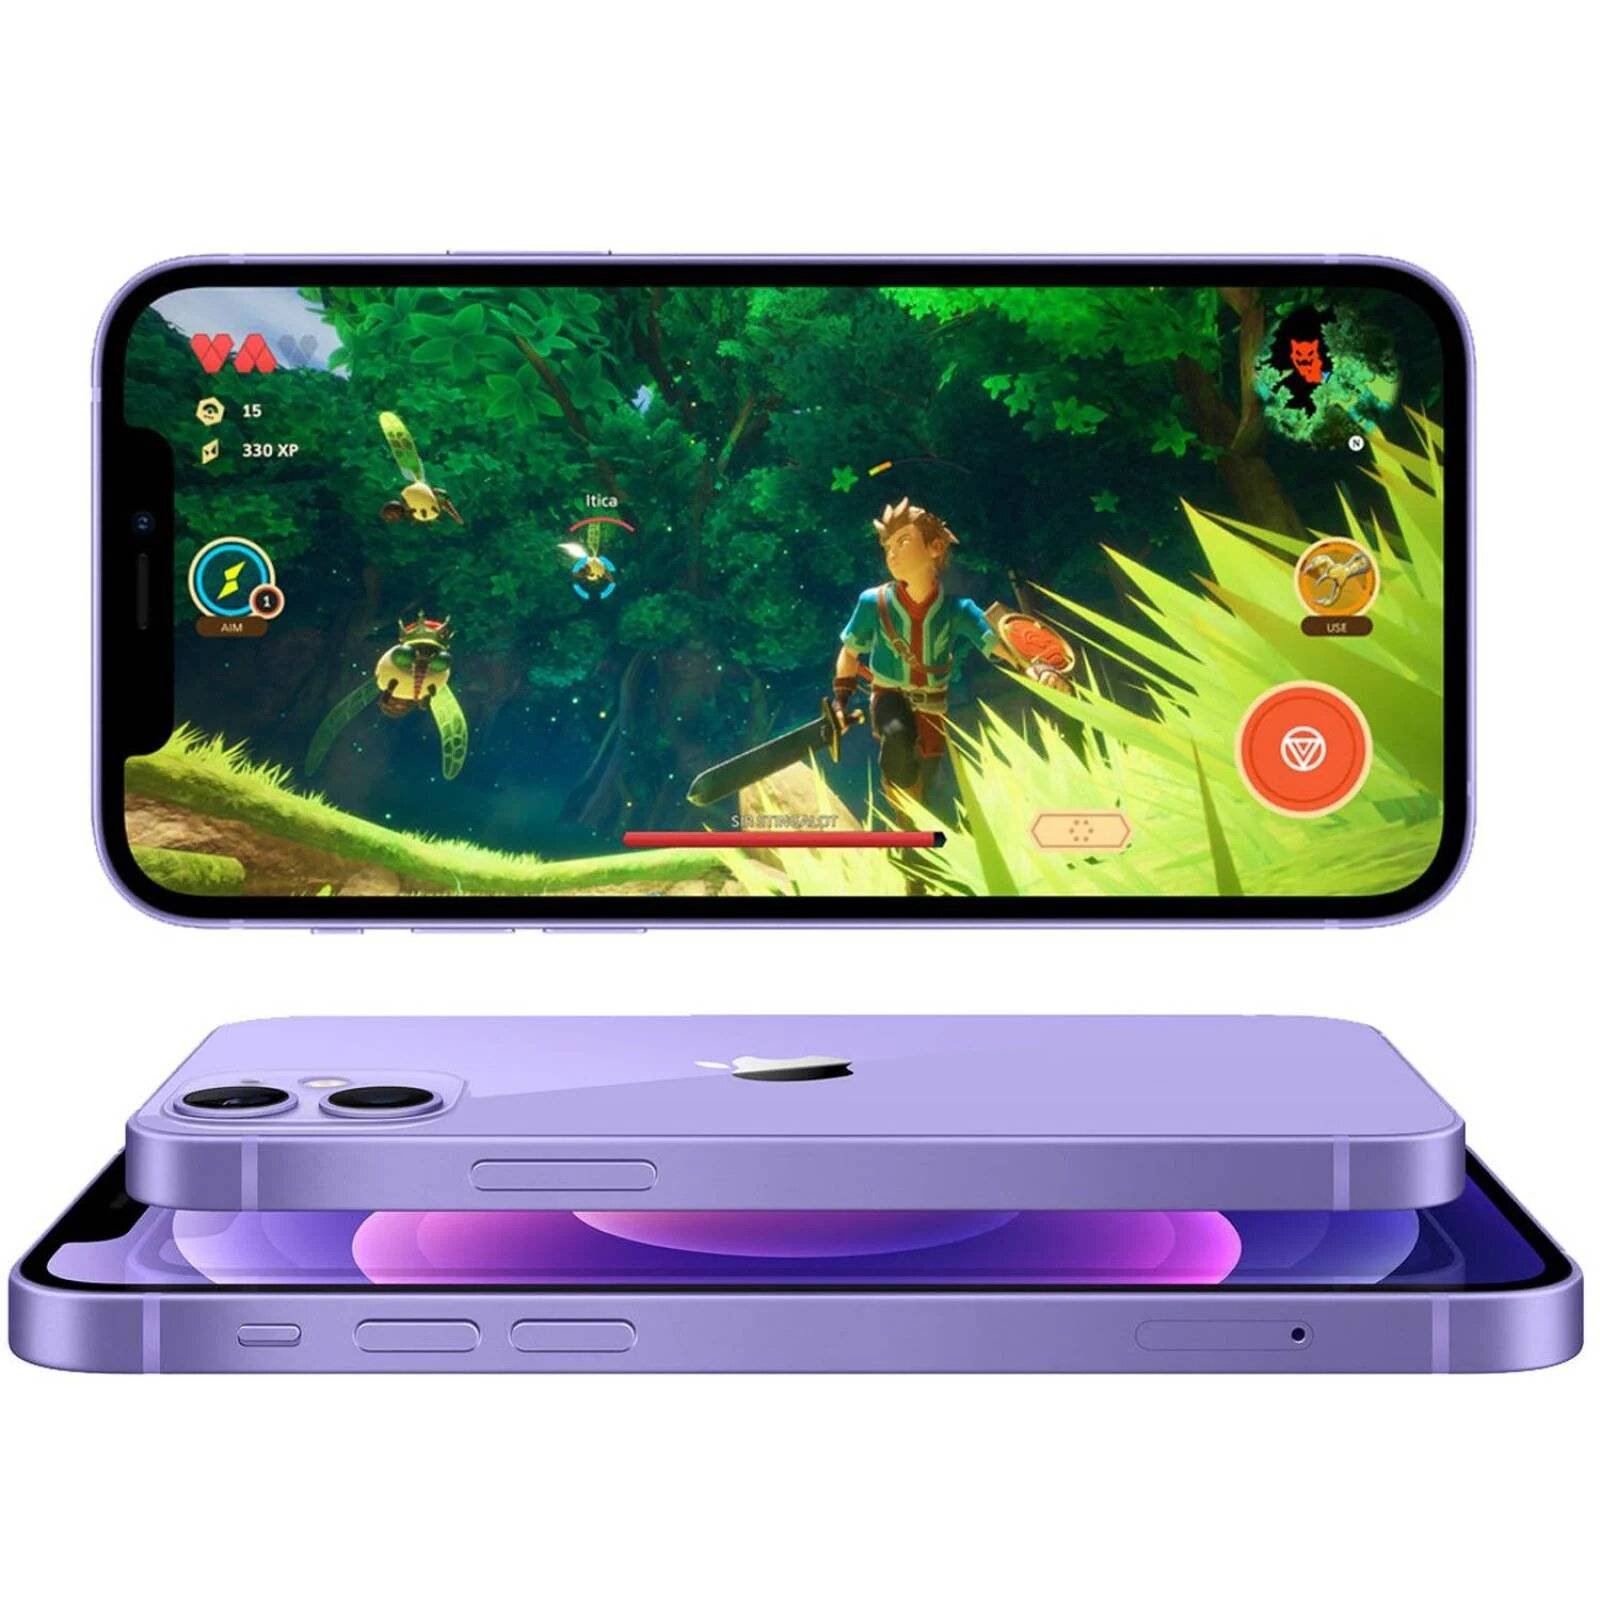 iPhone 12 Mini Púrpura 128Gb Reacondicionado